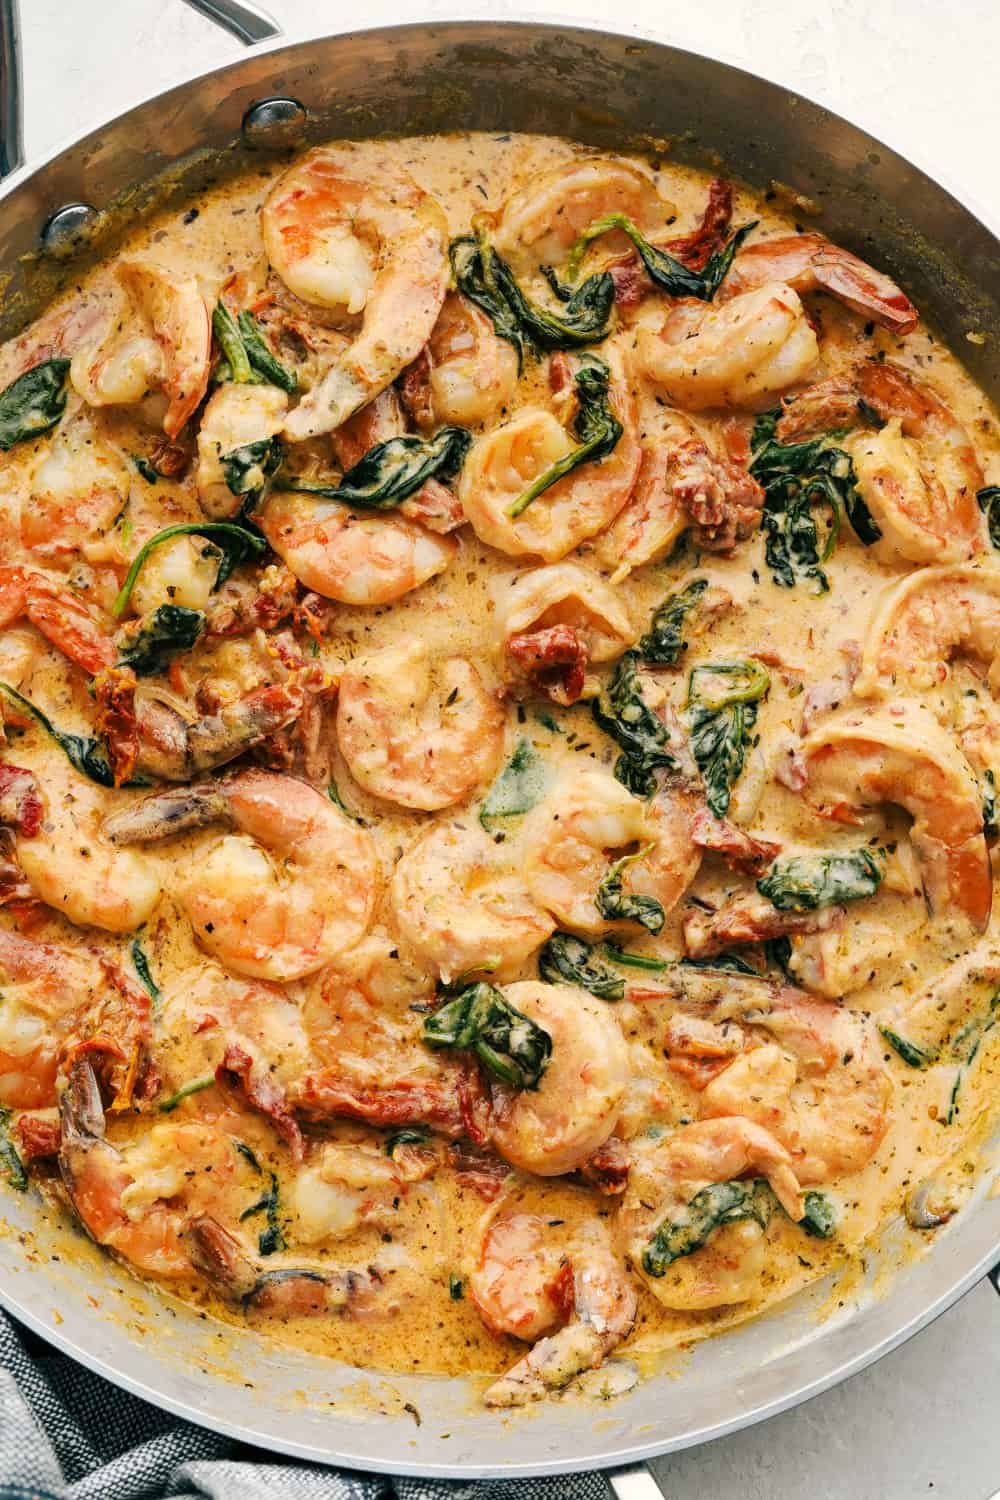 Tuscan Garlic Shrimp in a pan ready to eat.